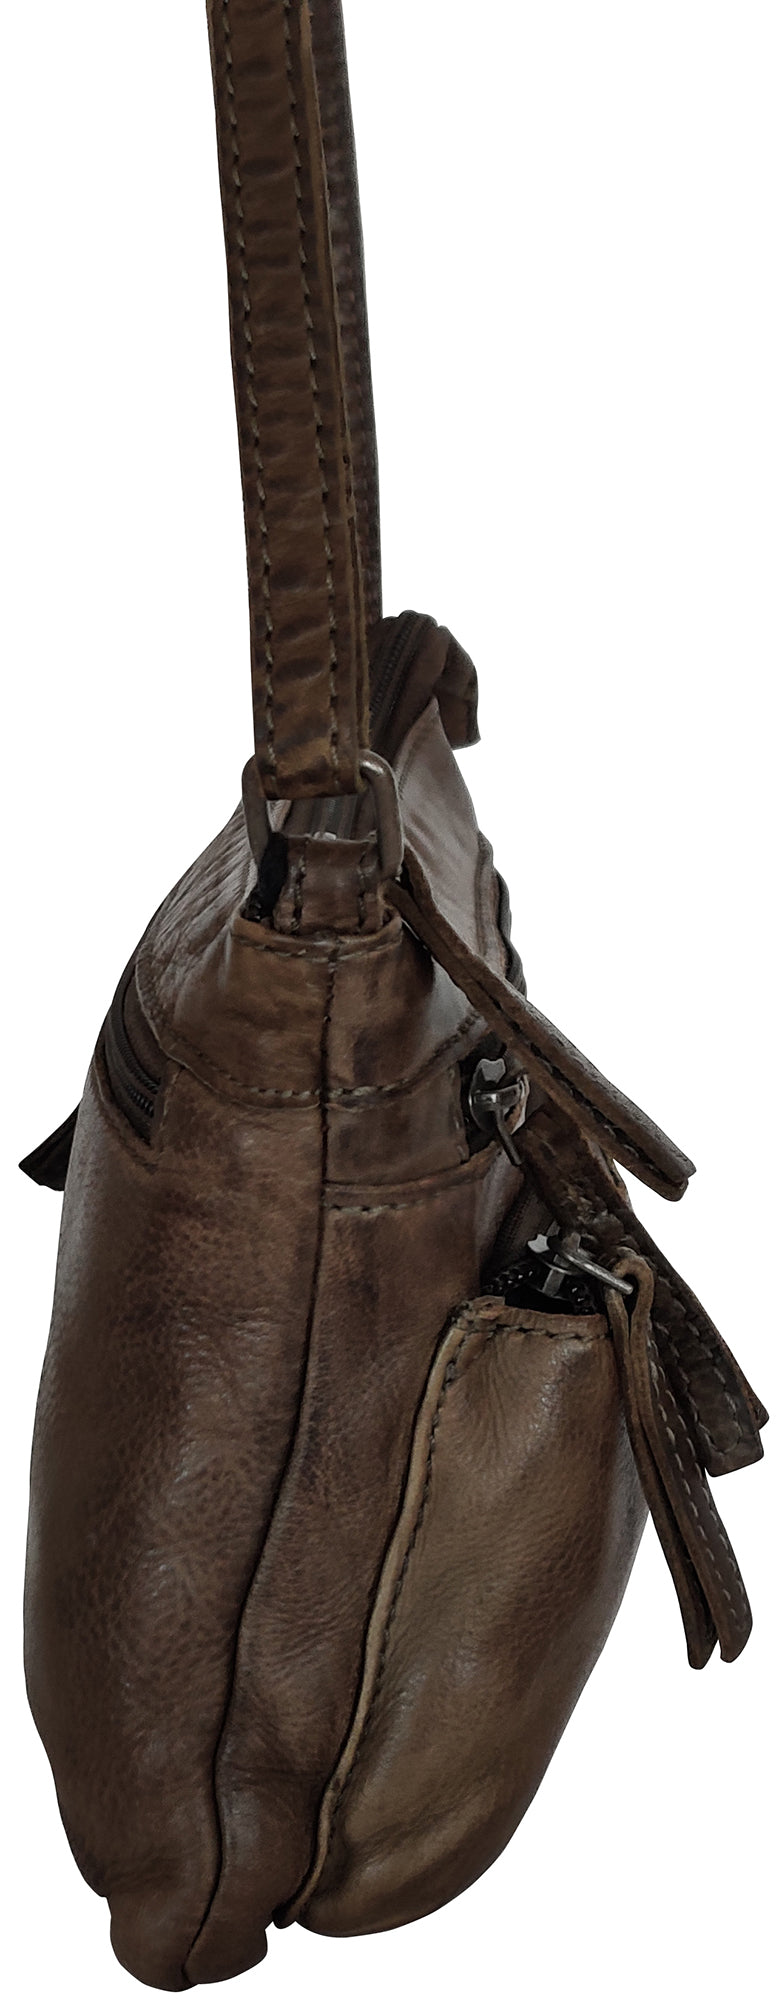 Leather Crossbody Handbag for Women, Olive